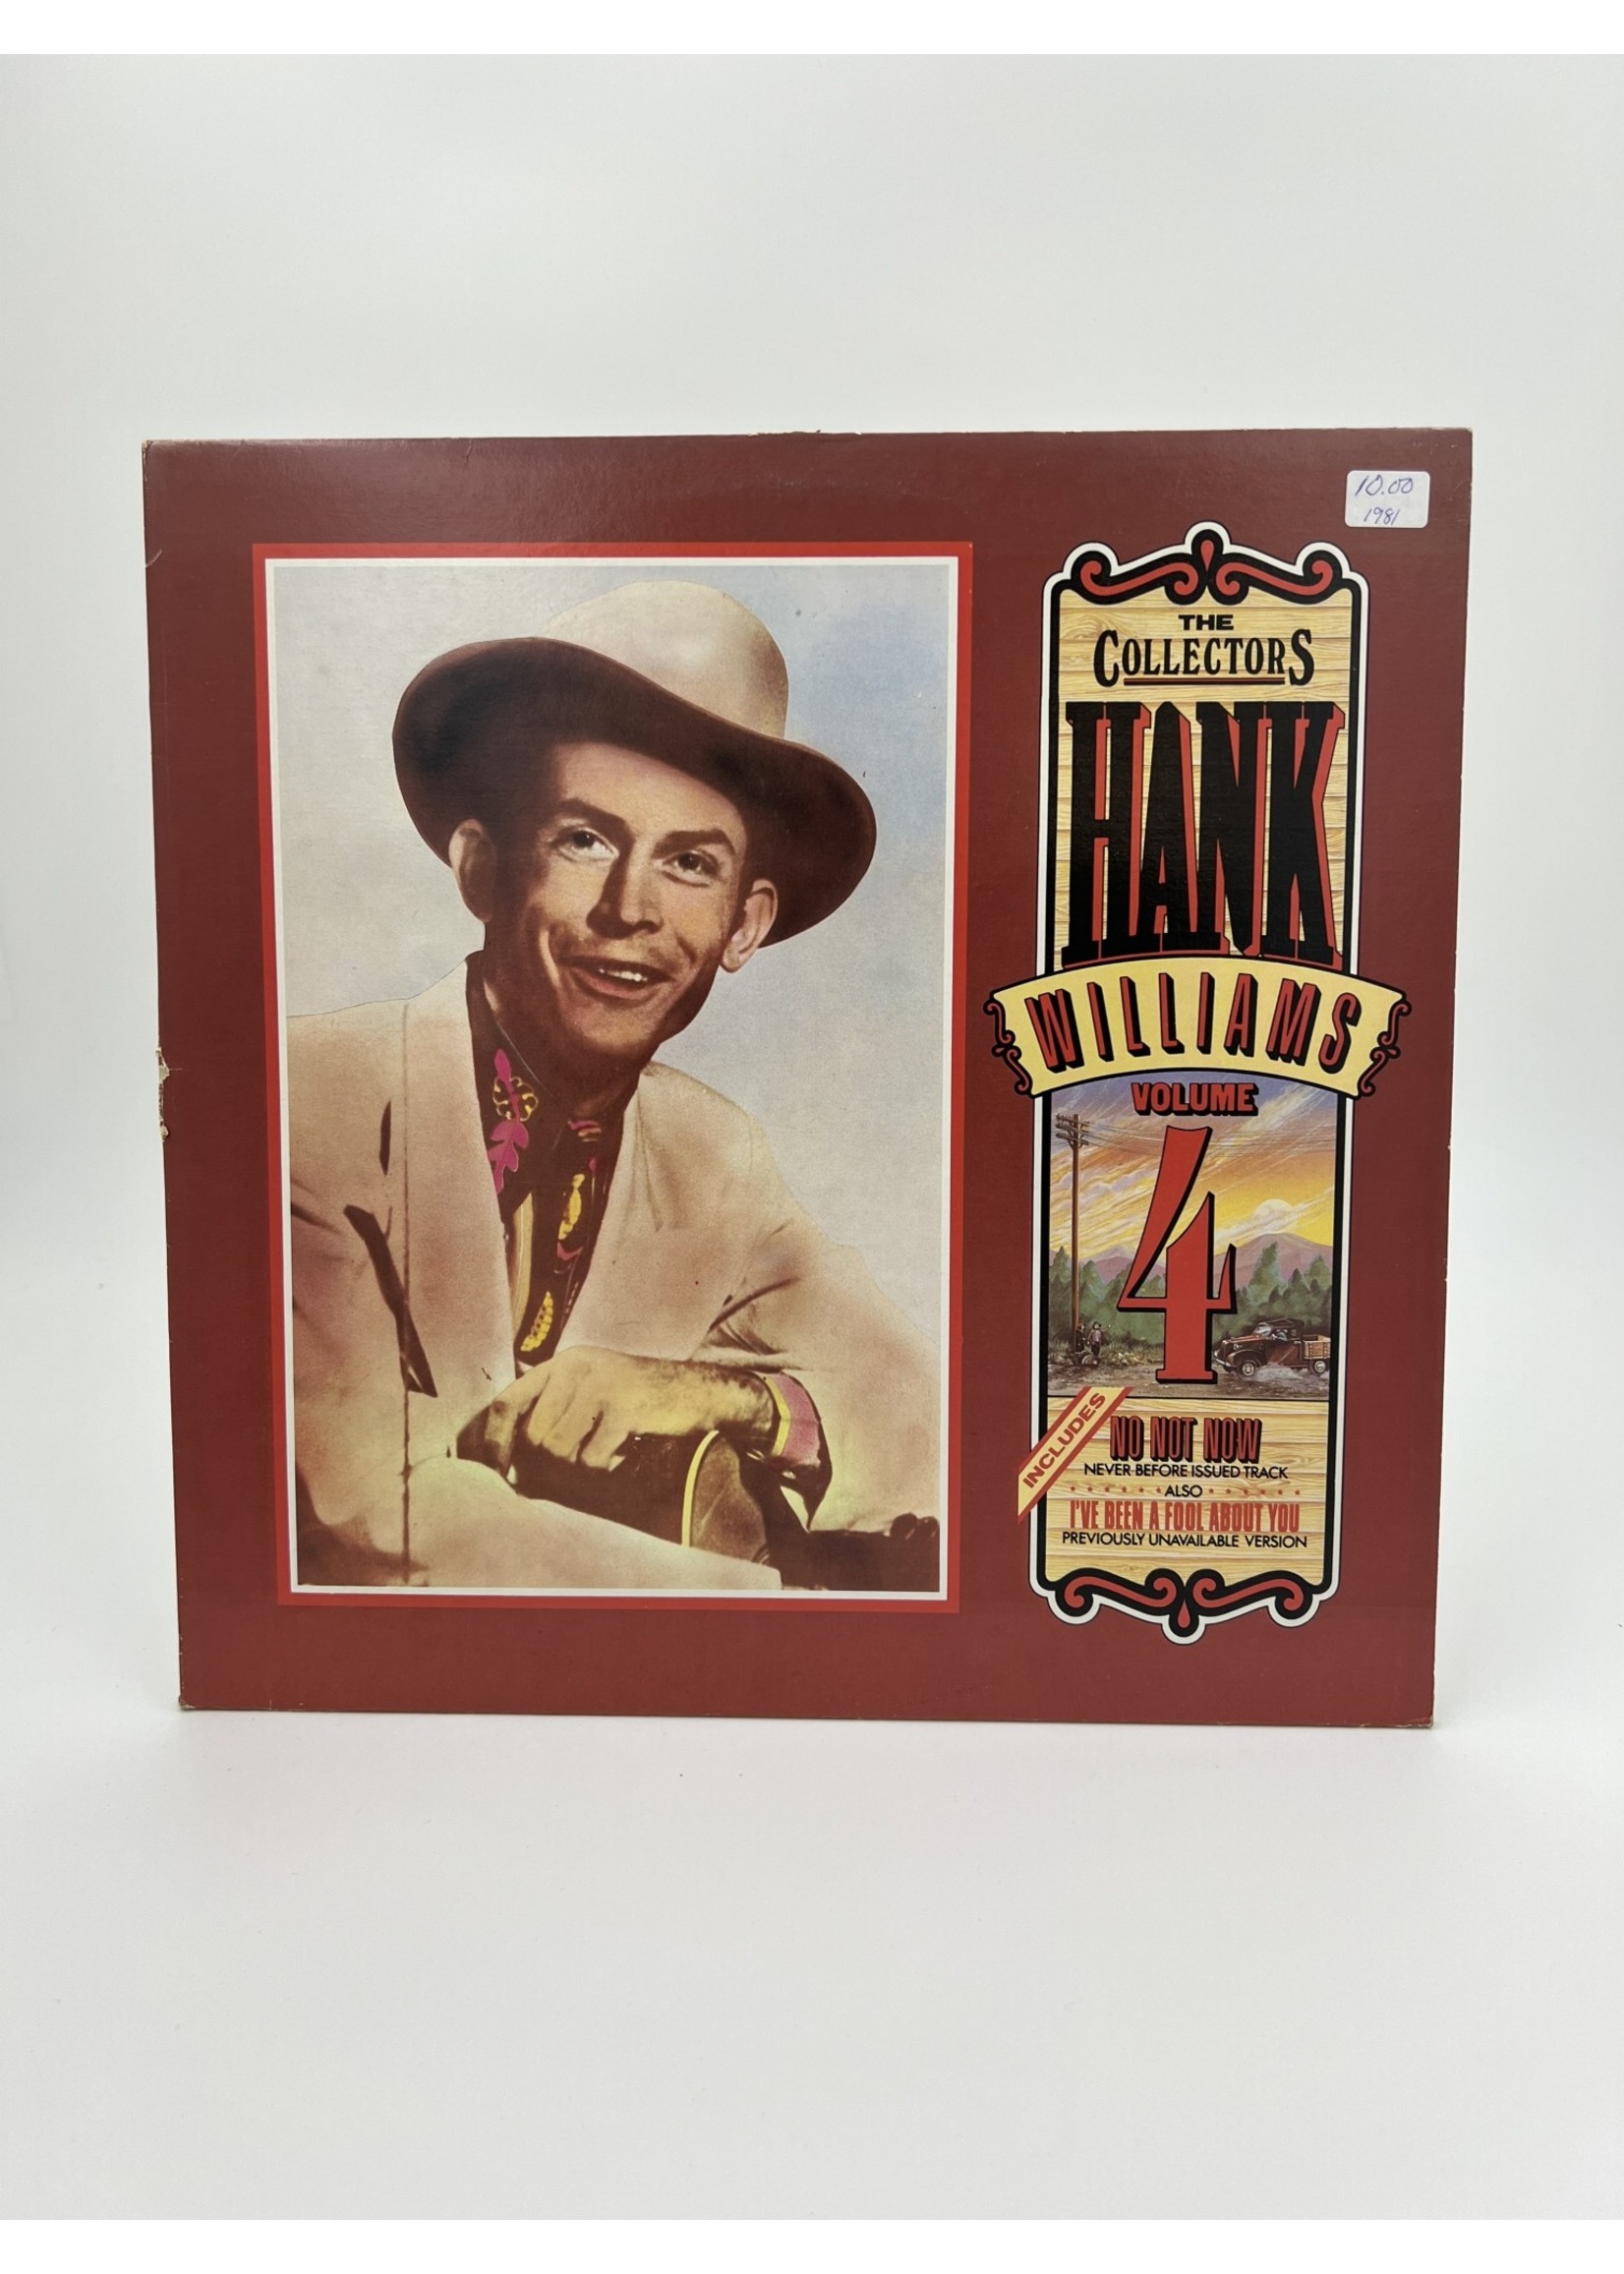 LP Hank Williams Volume 4 The Collectors LP RECORD